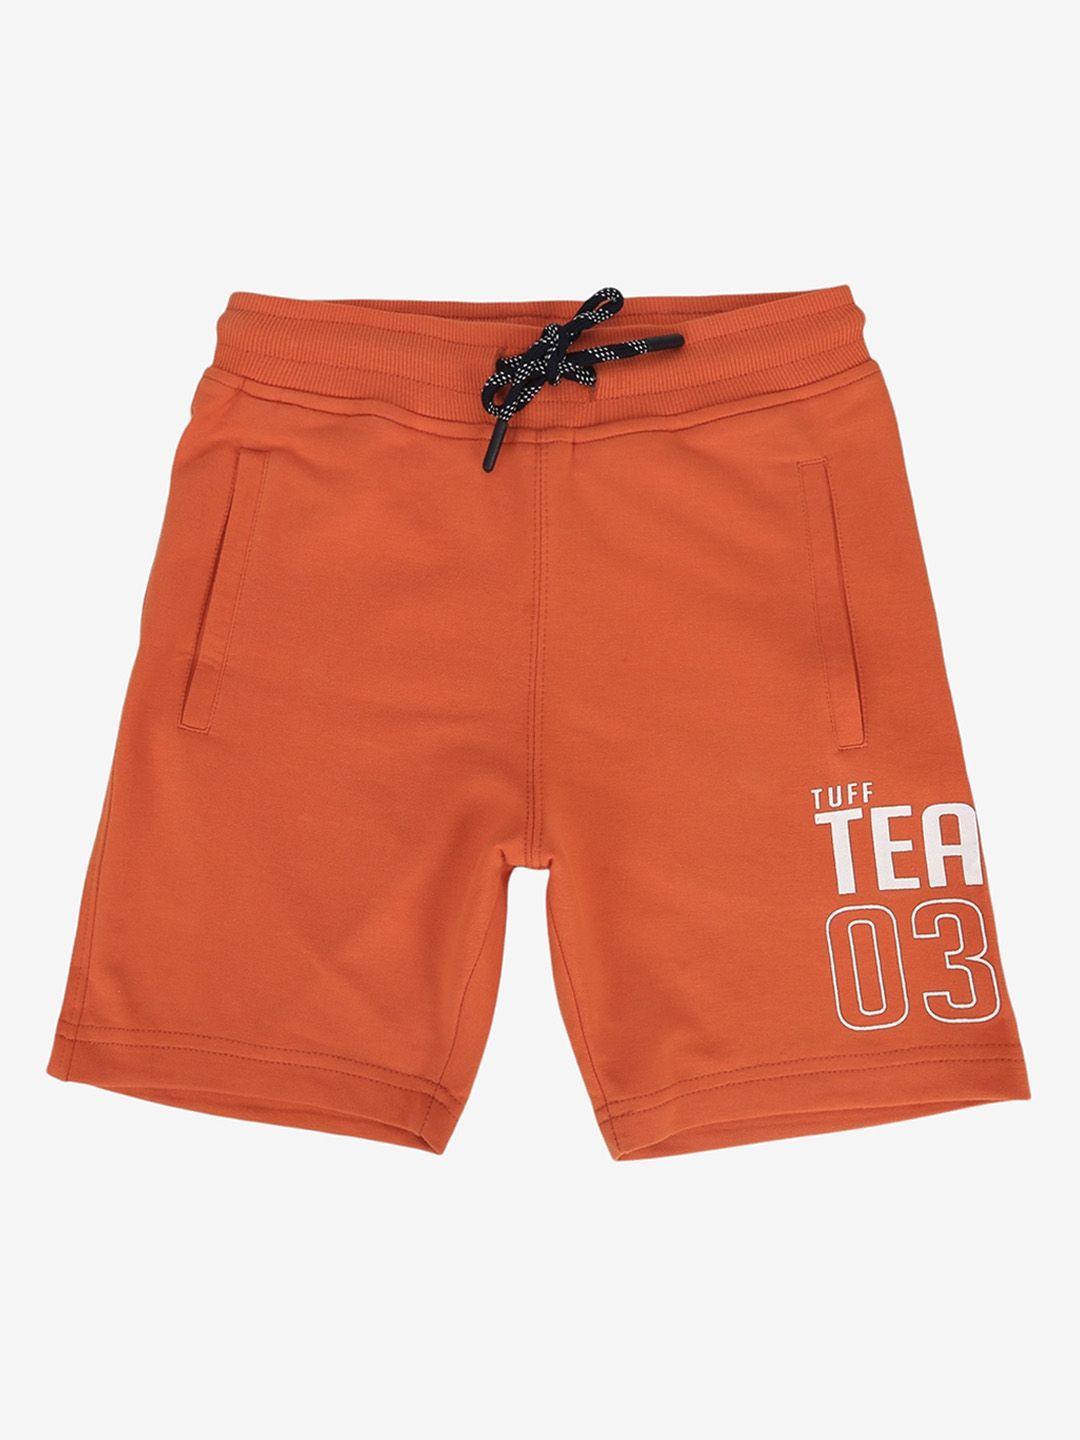 alan jones boys orange outdoor shorts